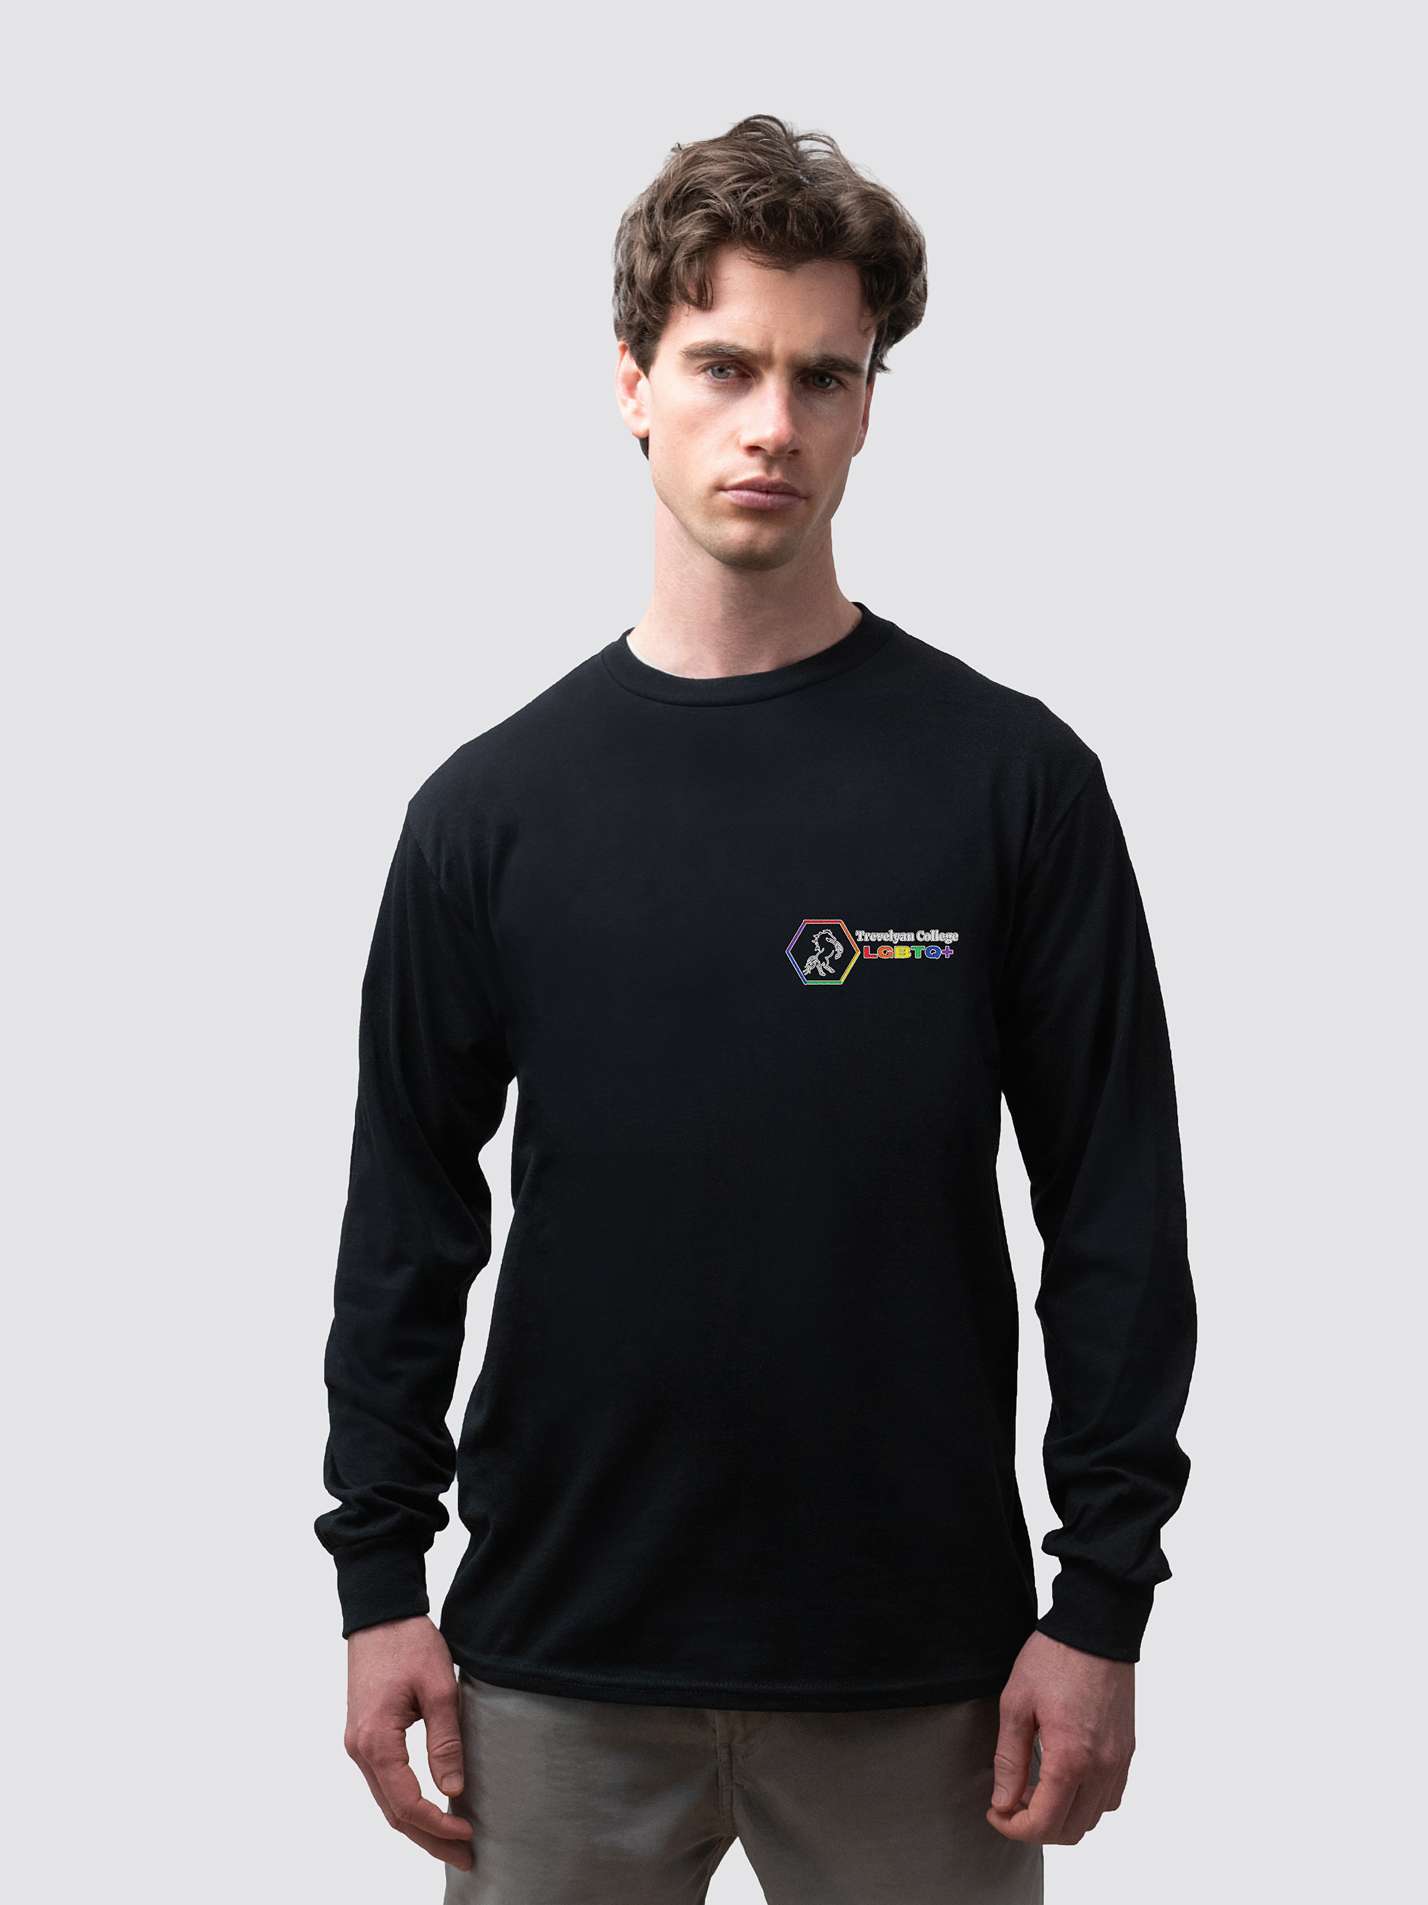 Trevelyan College Durham LGBTQ+ Unisex Cotton Long Sleeve T-Shirt